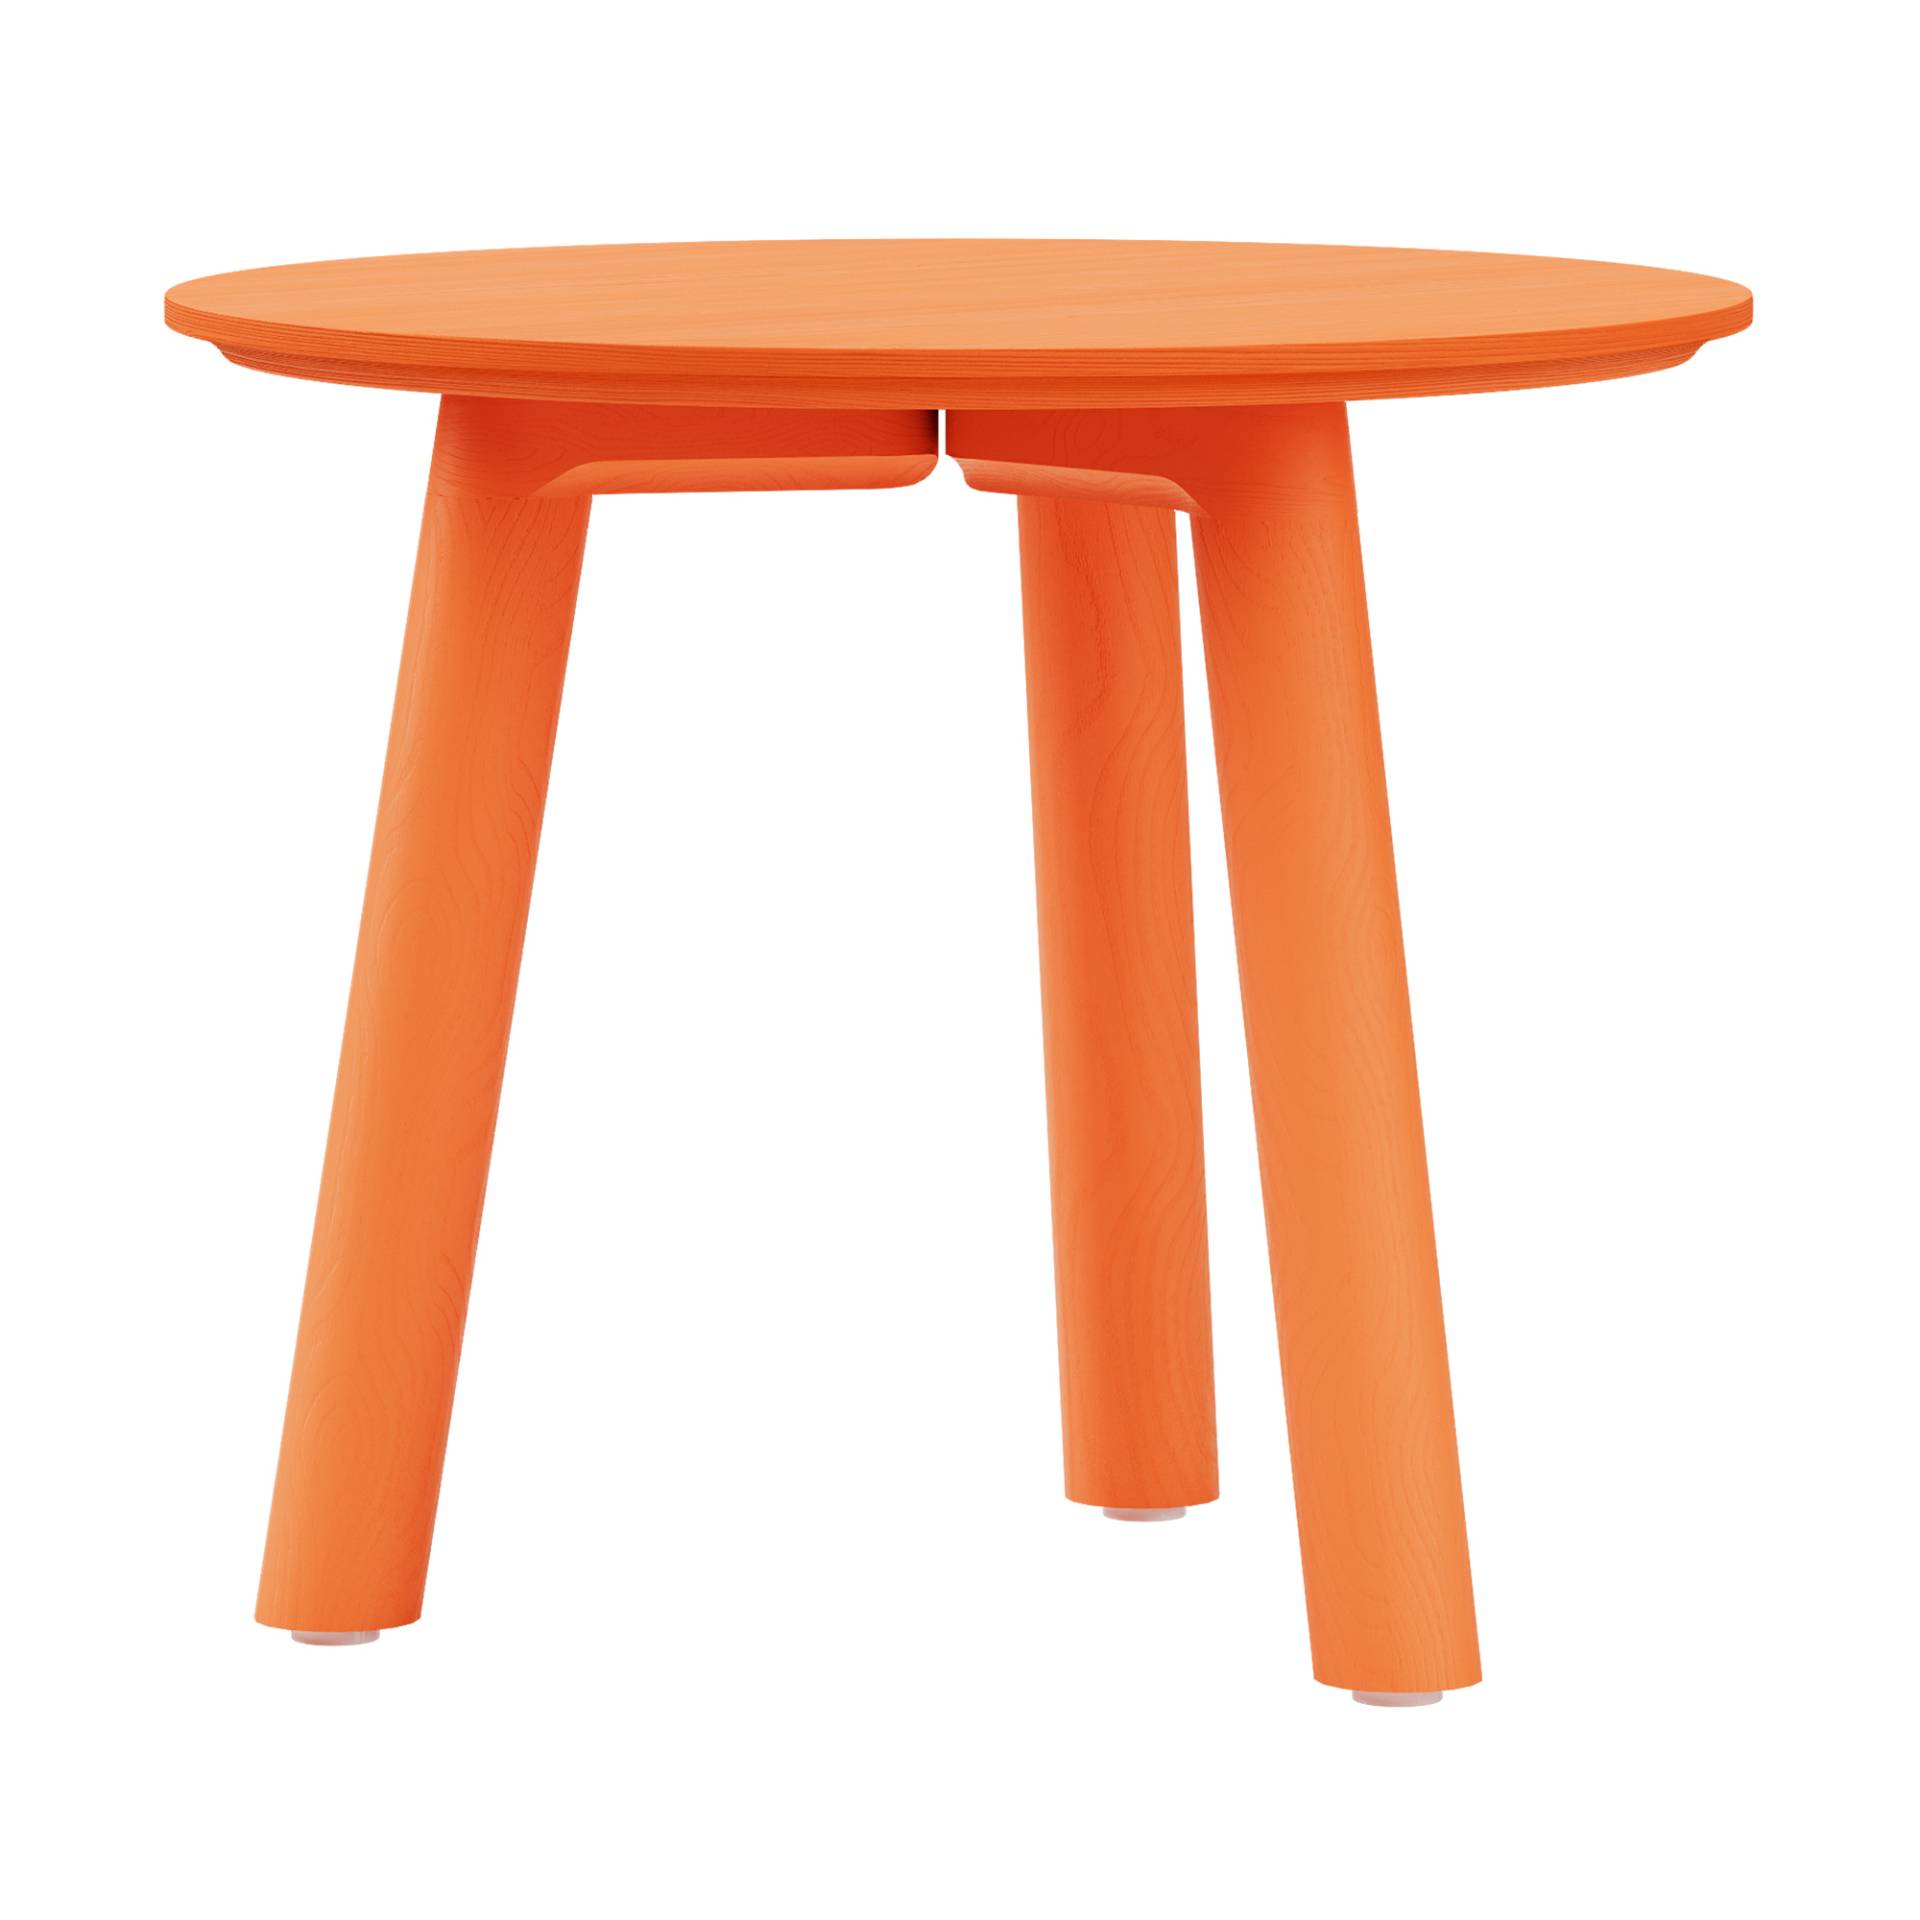 OUT OBJEKTE UNSERER TAGE - Meyer Color Couchtisch Medium H 45cm - pure orange/lackiert/H 45cm x Ø 53cm von OUT OBJEKTE UNSERER TAGE